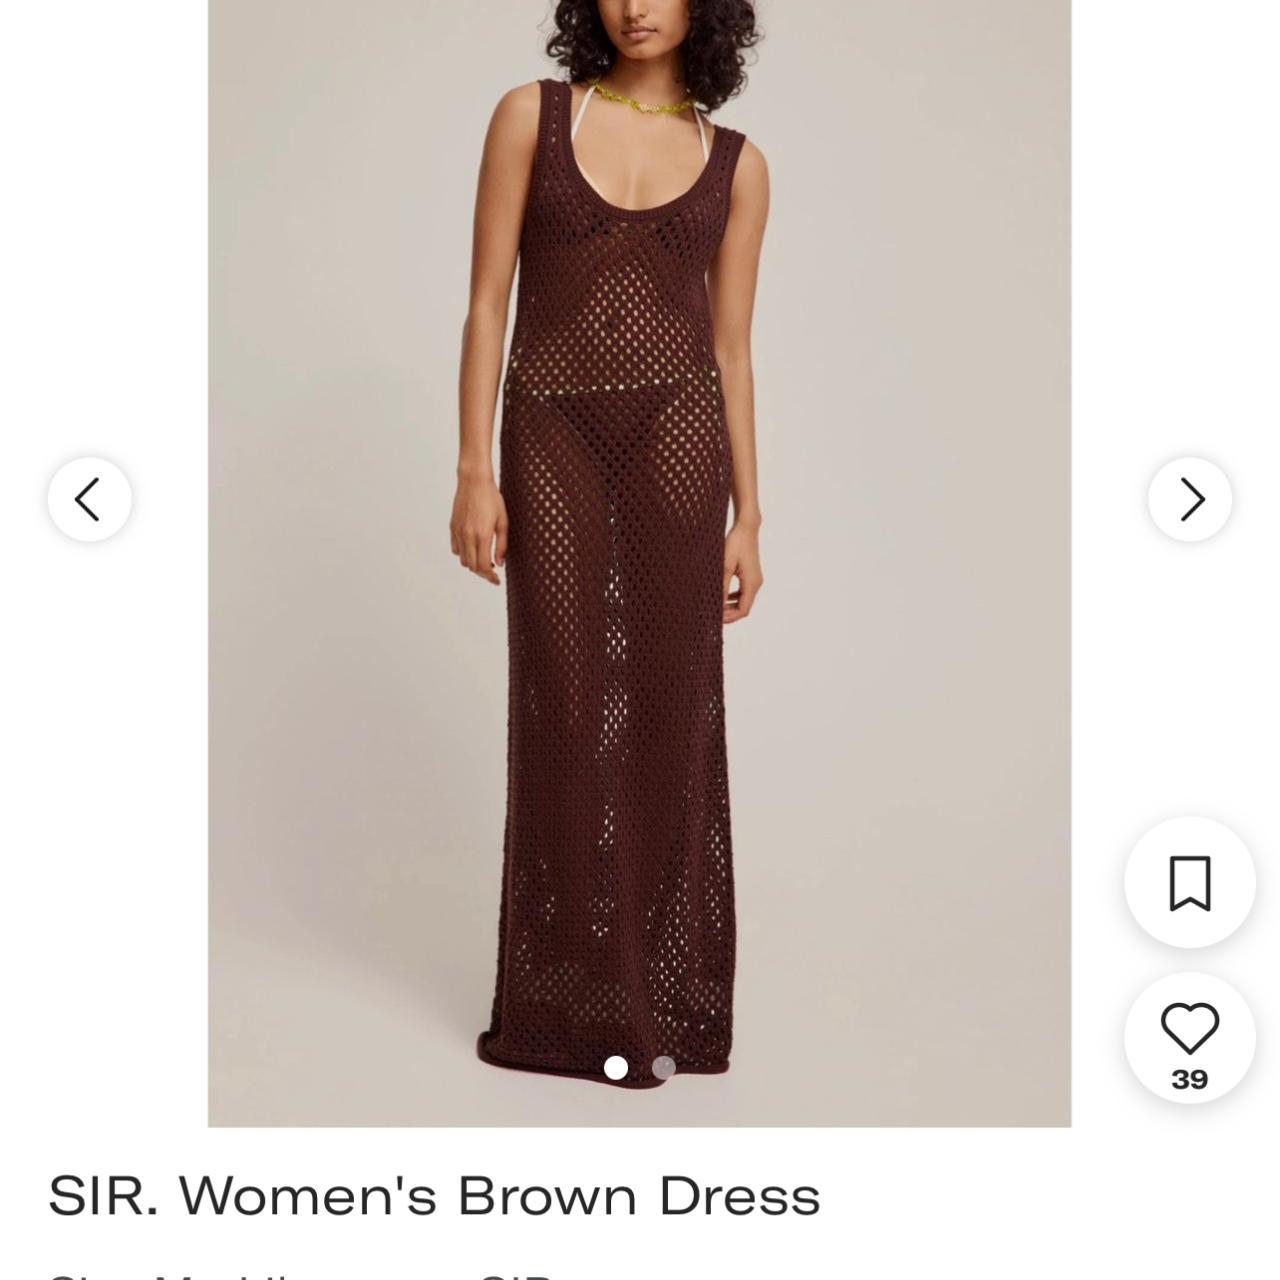 Thinking of selling venroy brown crochet tank dress - Depop